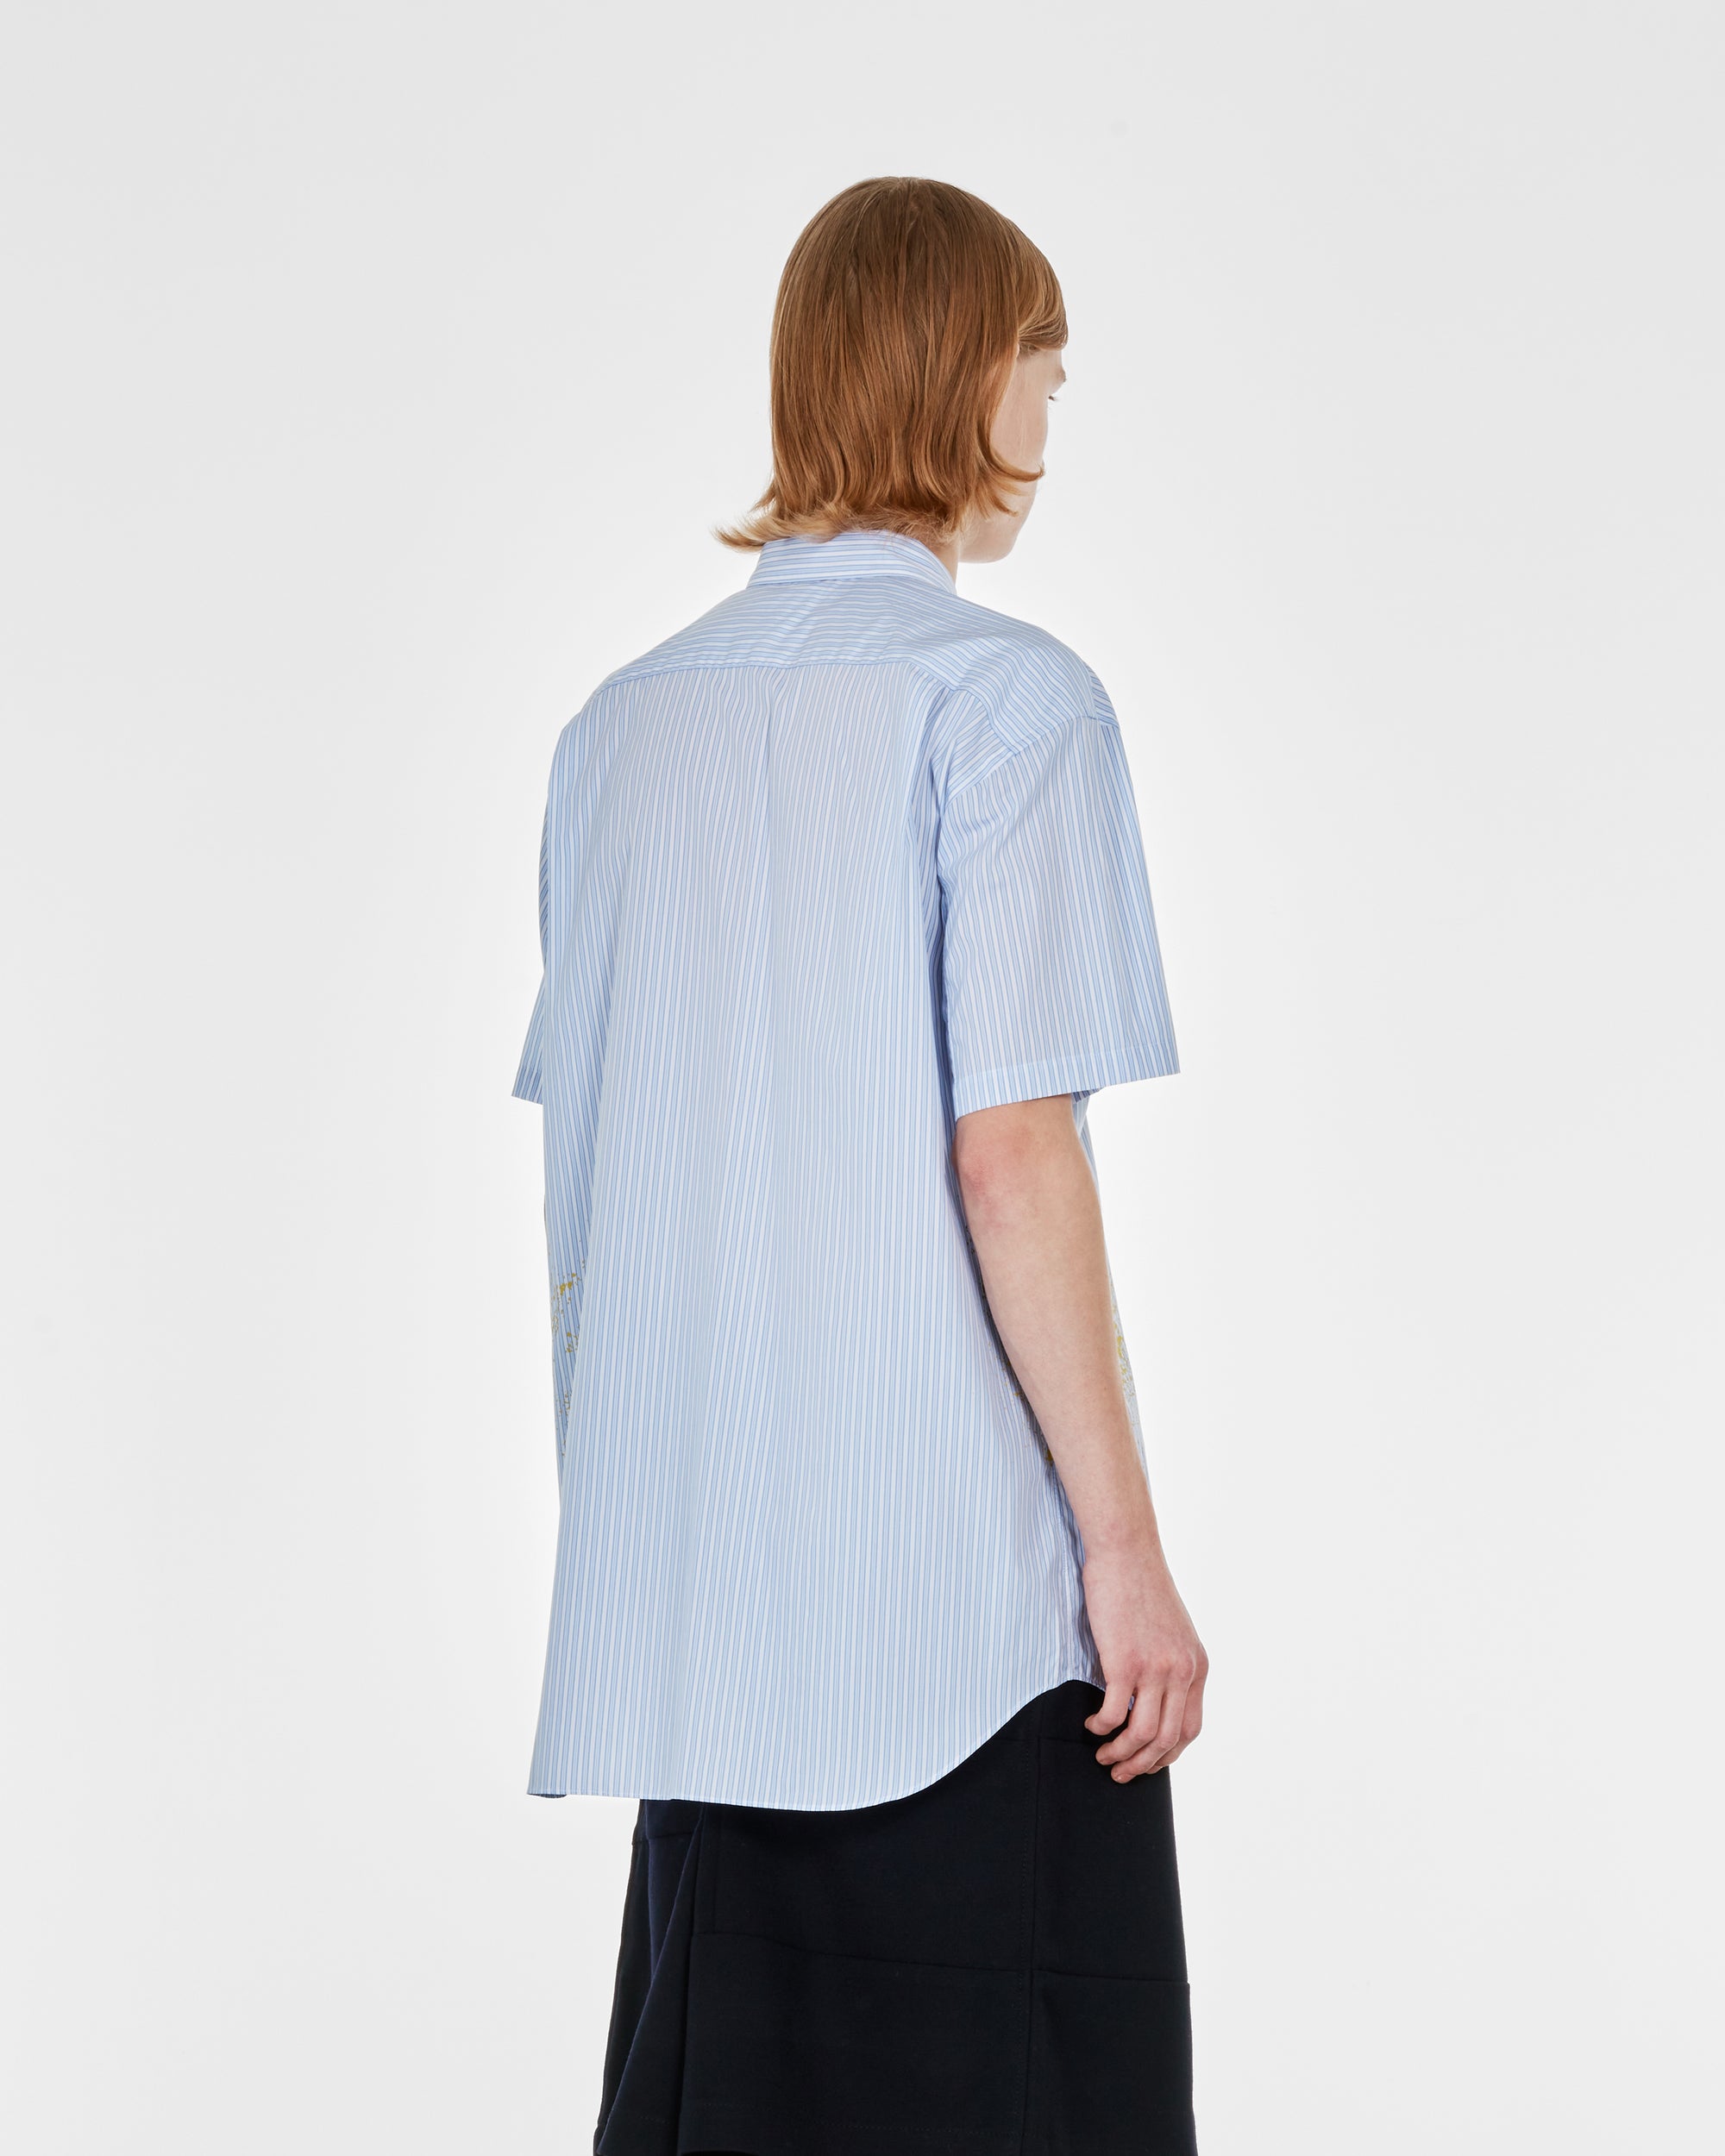 CDG Shirt - Men's Cotton Poplin Garment Printed Short Sleeve Shirt - (Stripe) view 4